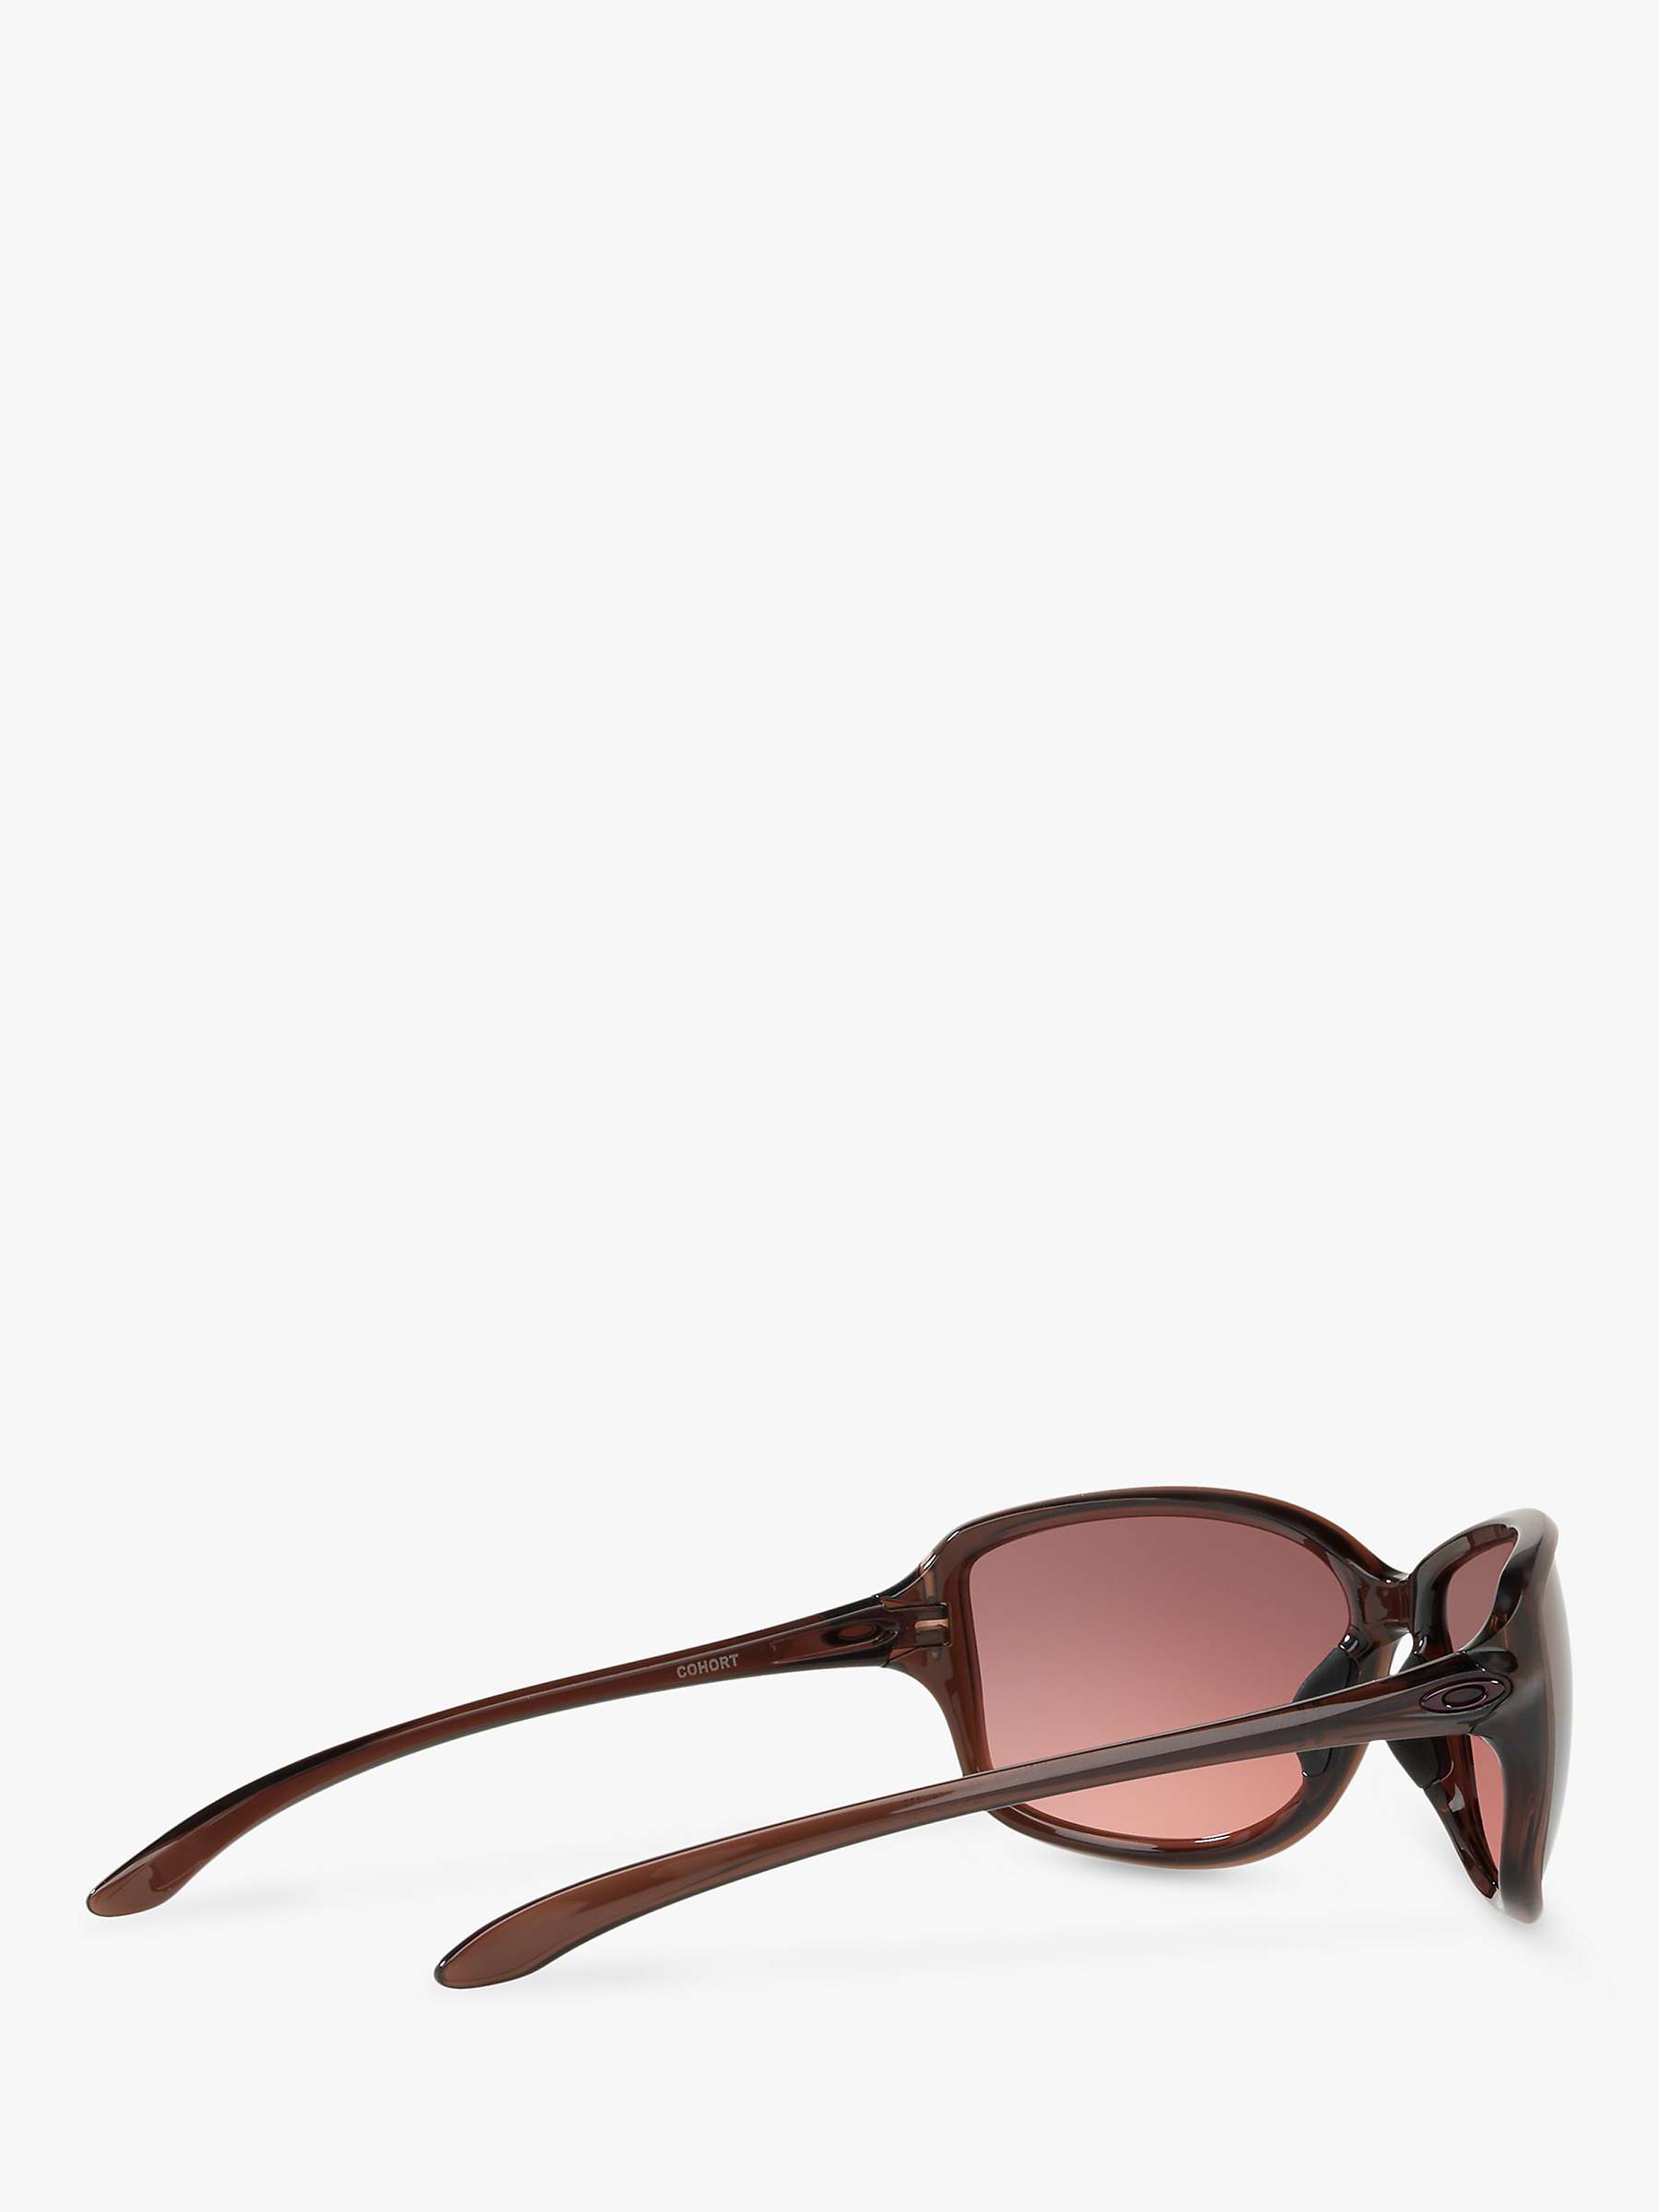 Buy Oakley OO9301 Cohort Rectangular Sunglasses, Amythest Online at johnlewis.com